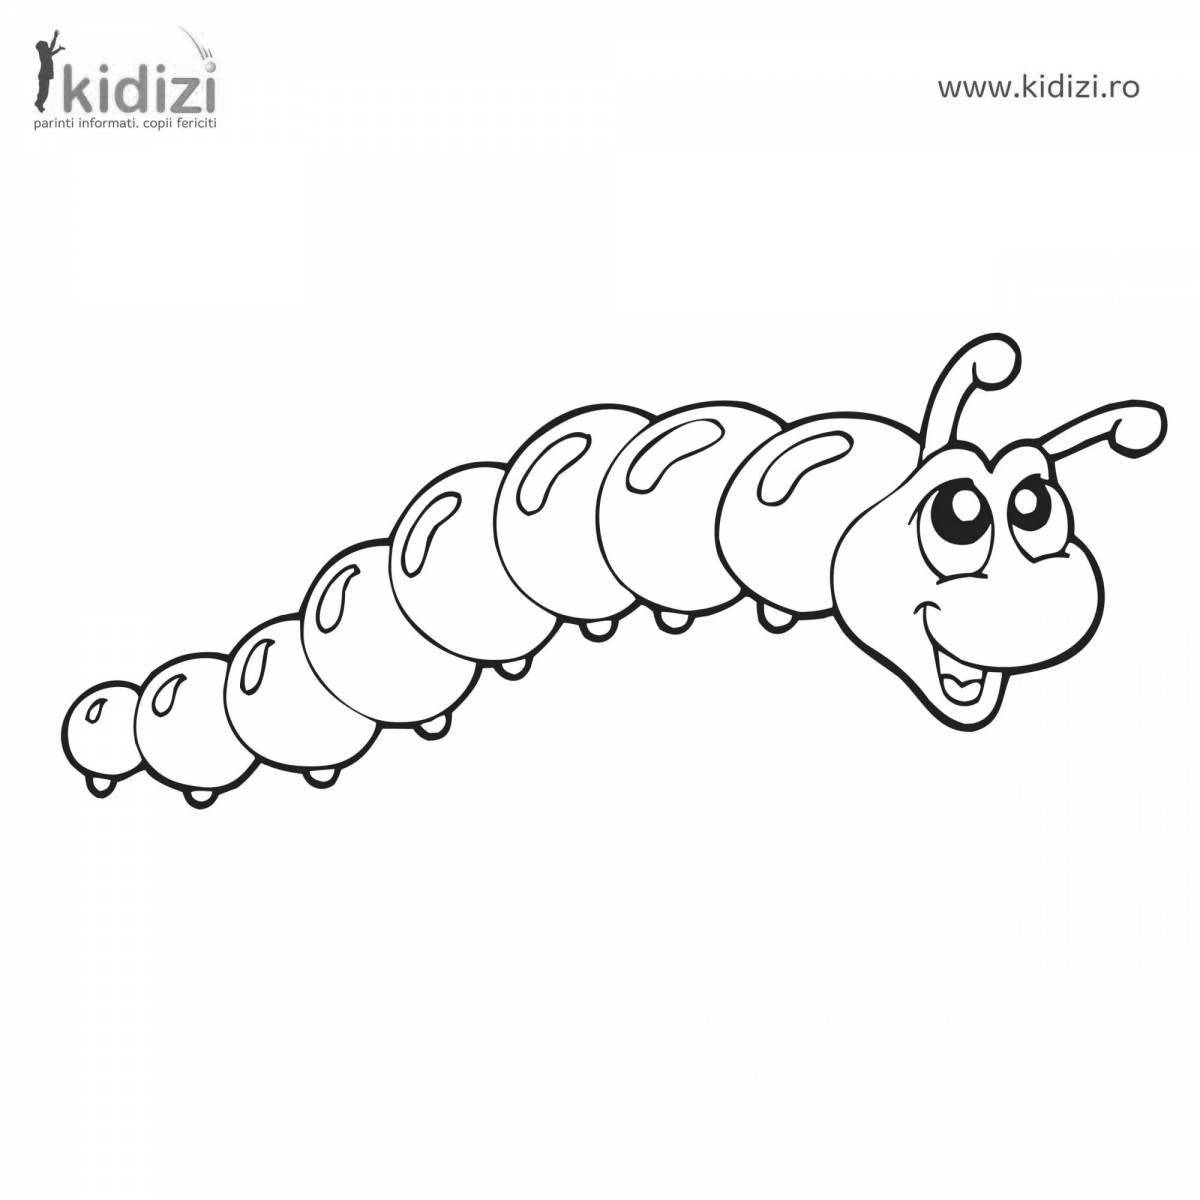 Animated caterpillar pj pug